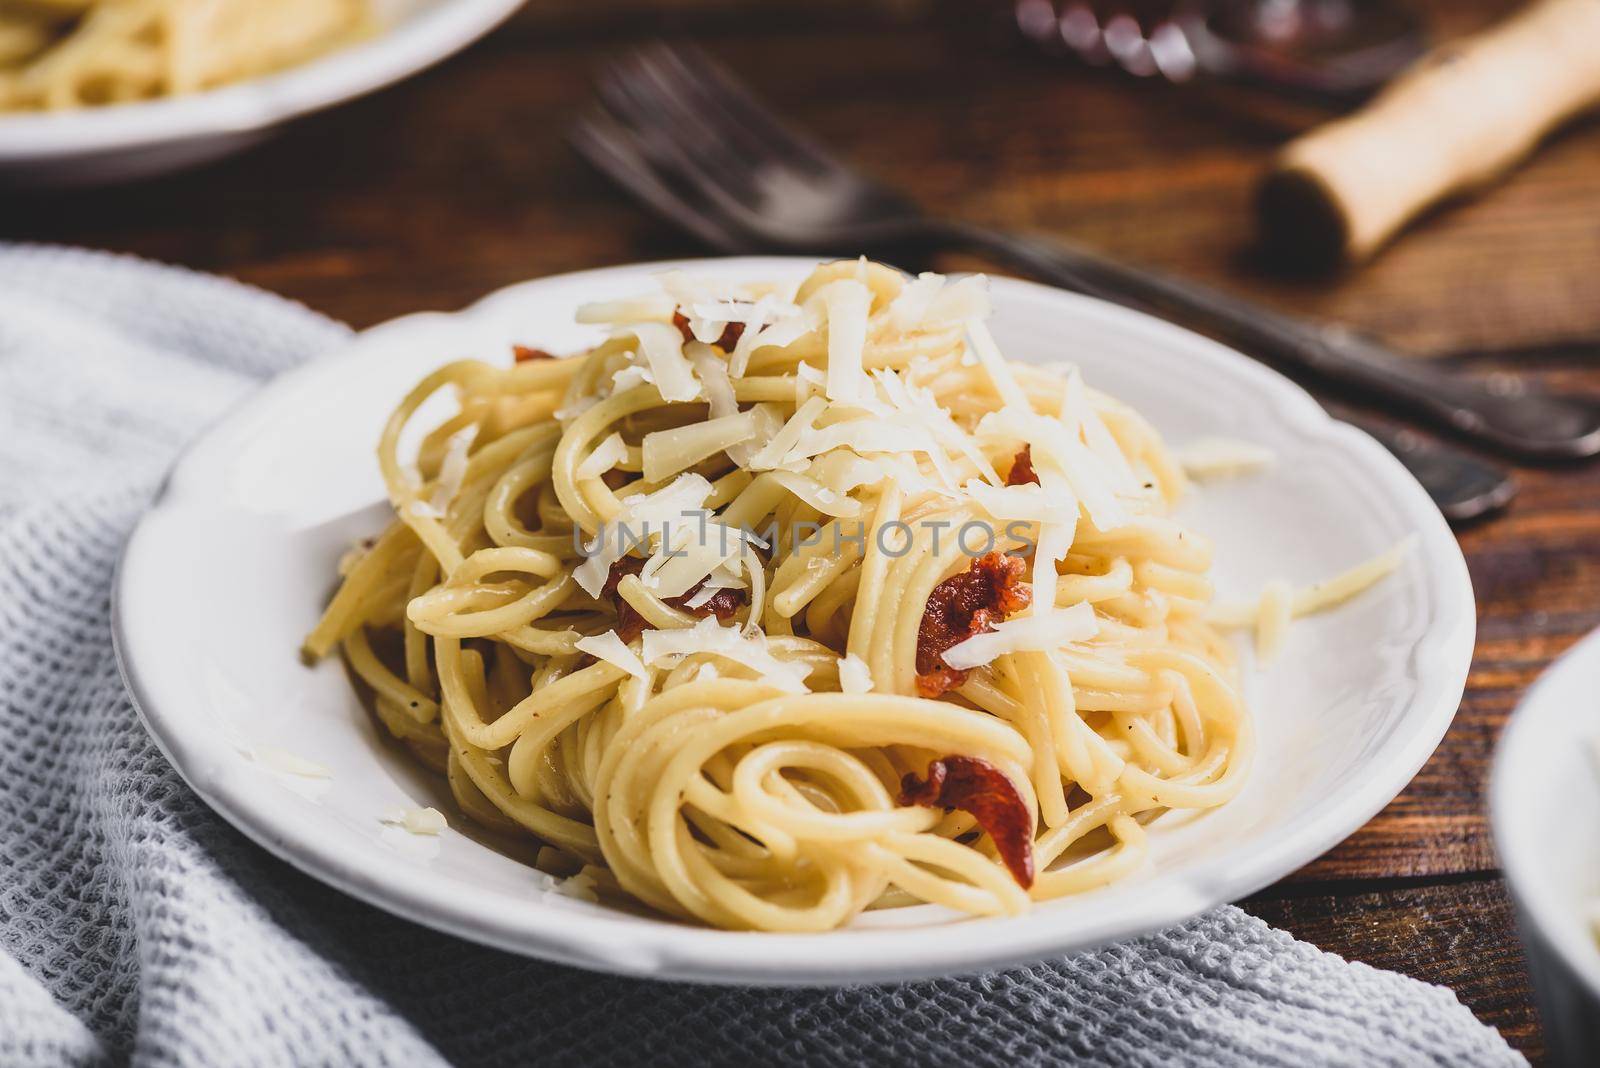 Classic carbonara pasta by Seva_blsv